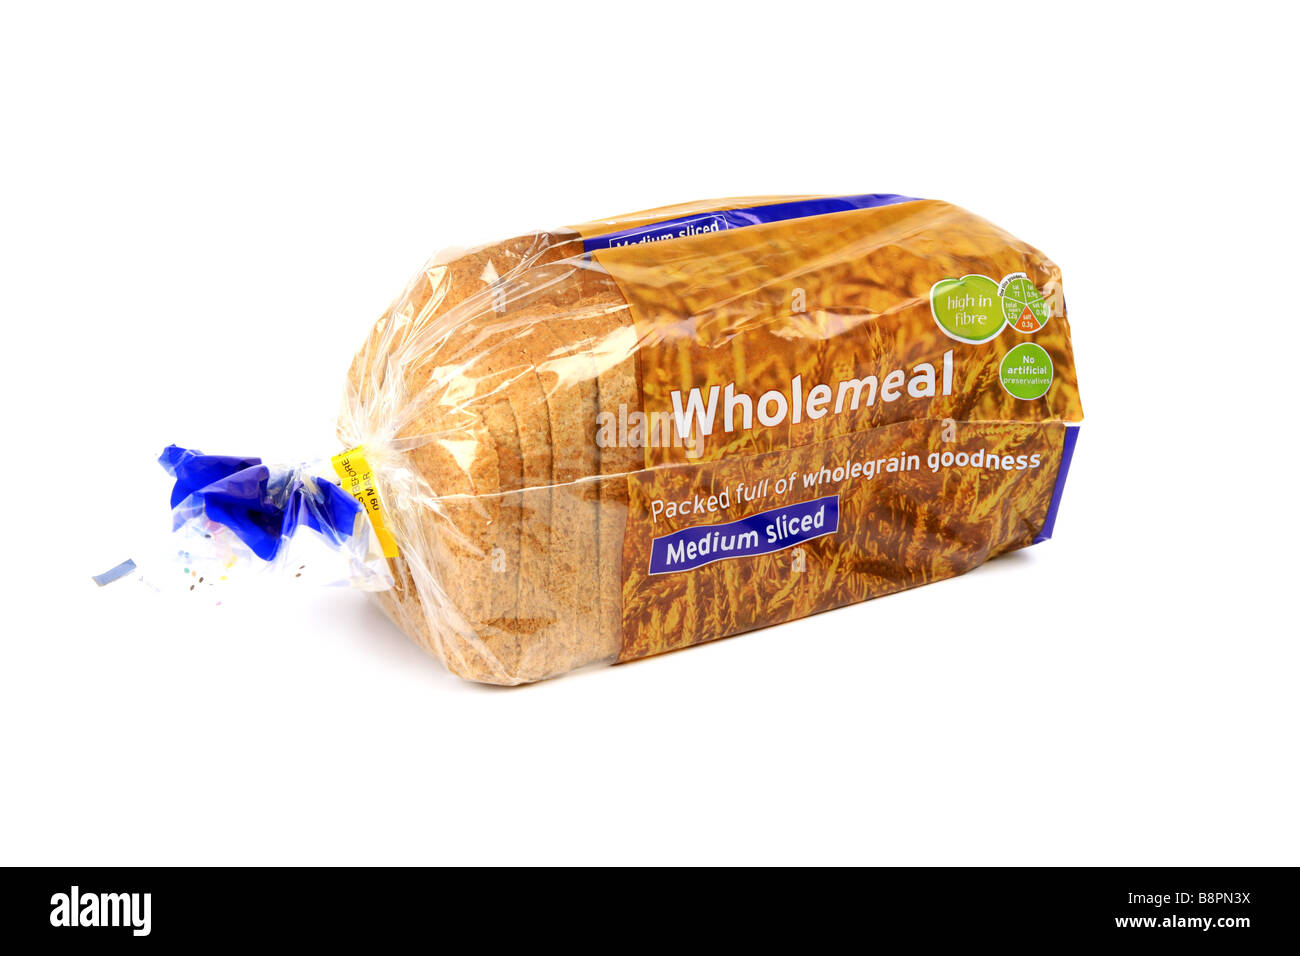 https://c8.alamy.com/comp/B8PN3X/brown-bread-in-a-plastic-wrapper-against-a-white-background-B8PN3X.jpg